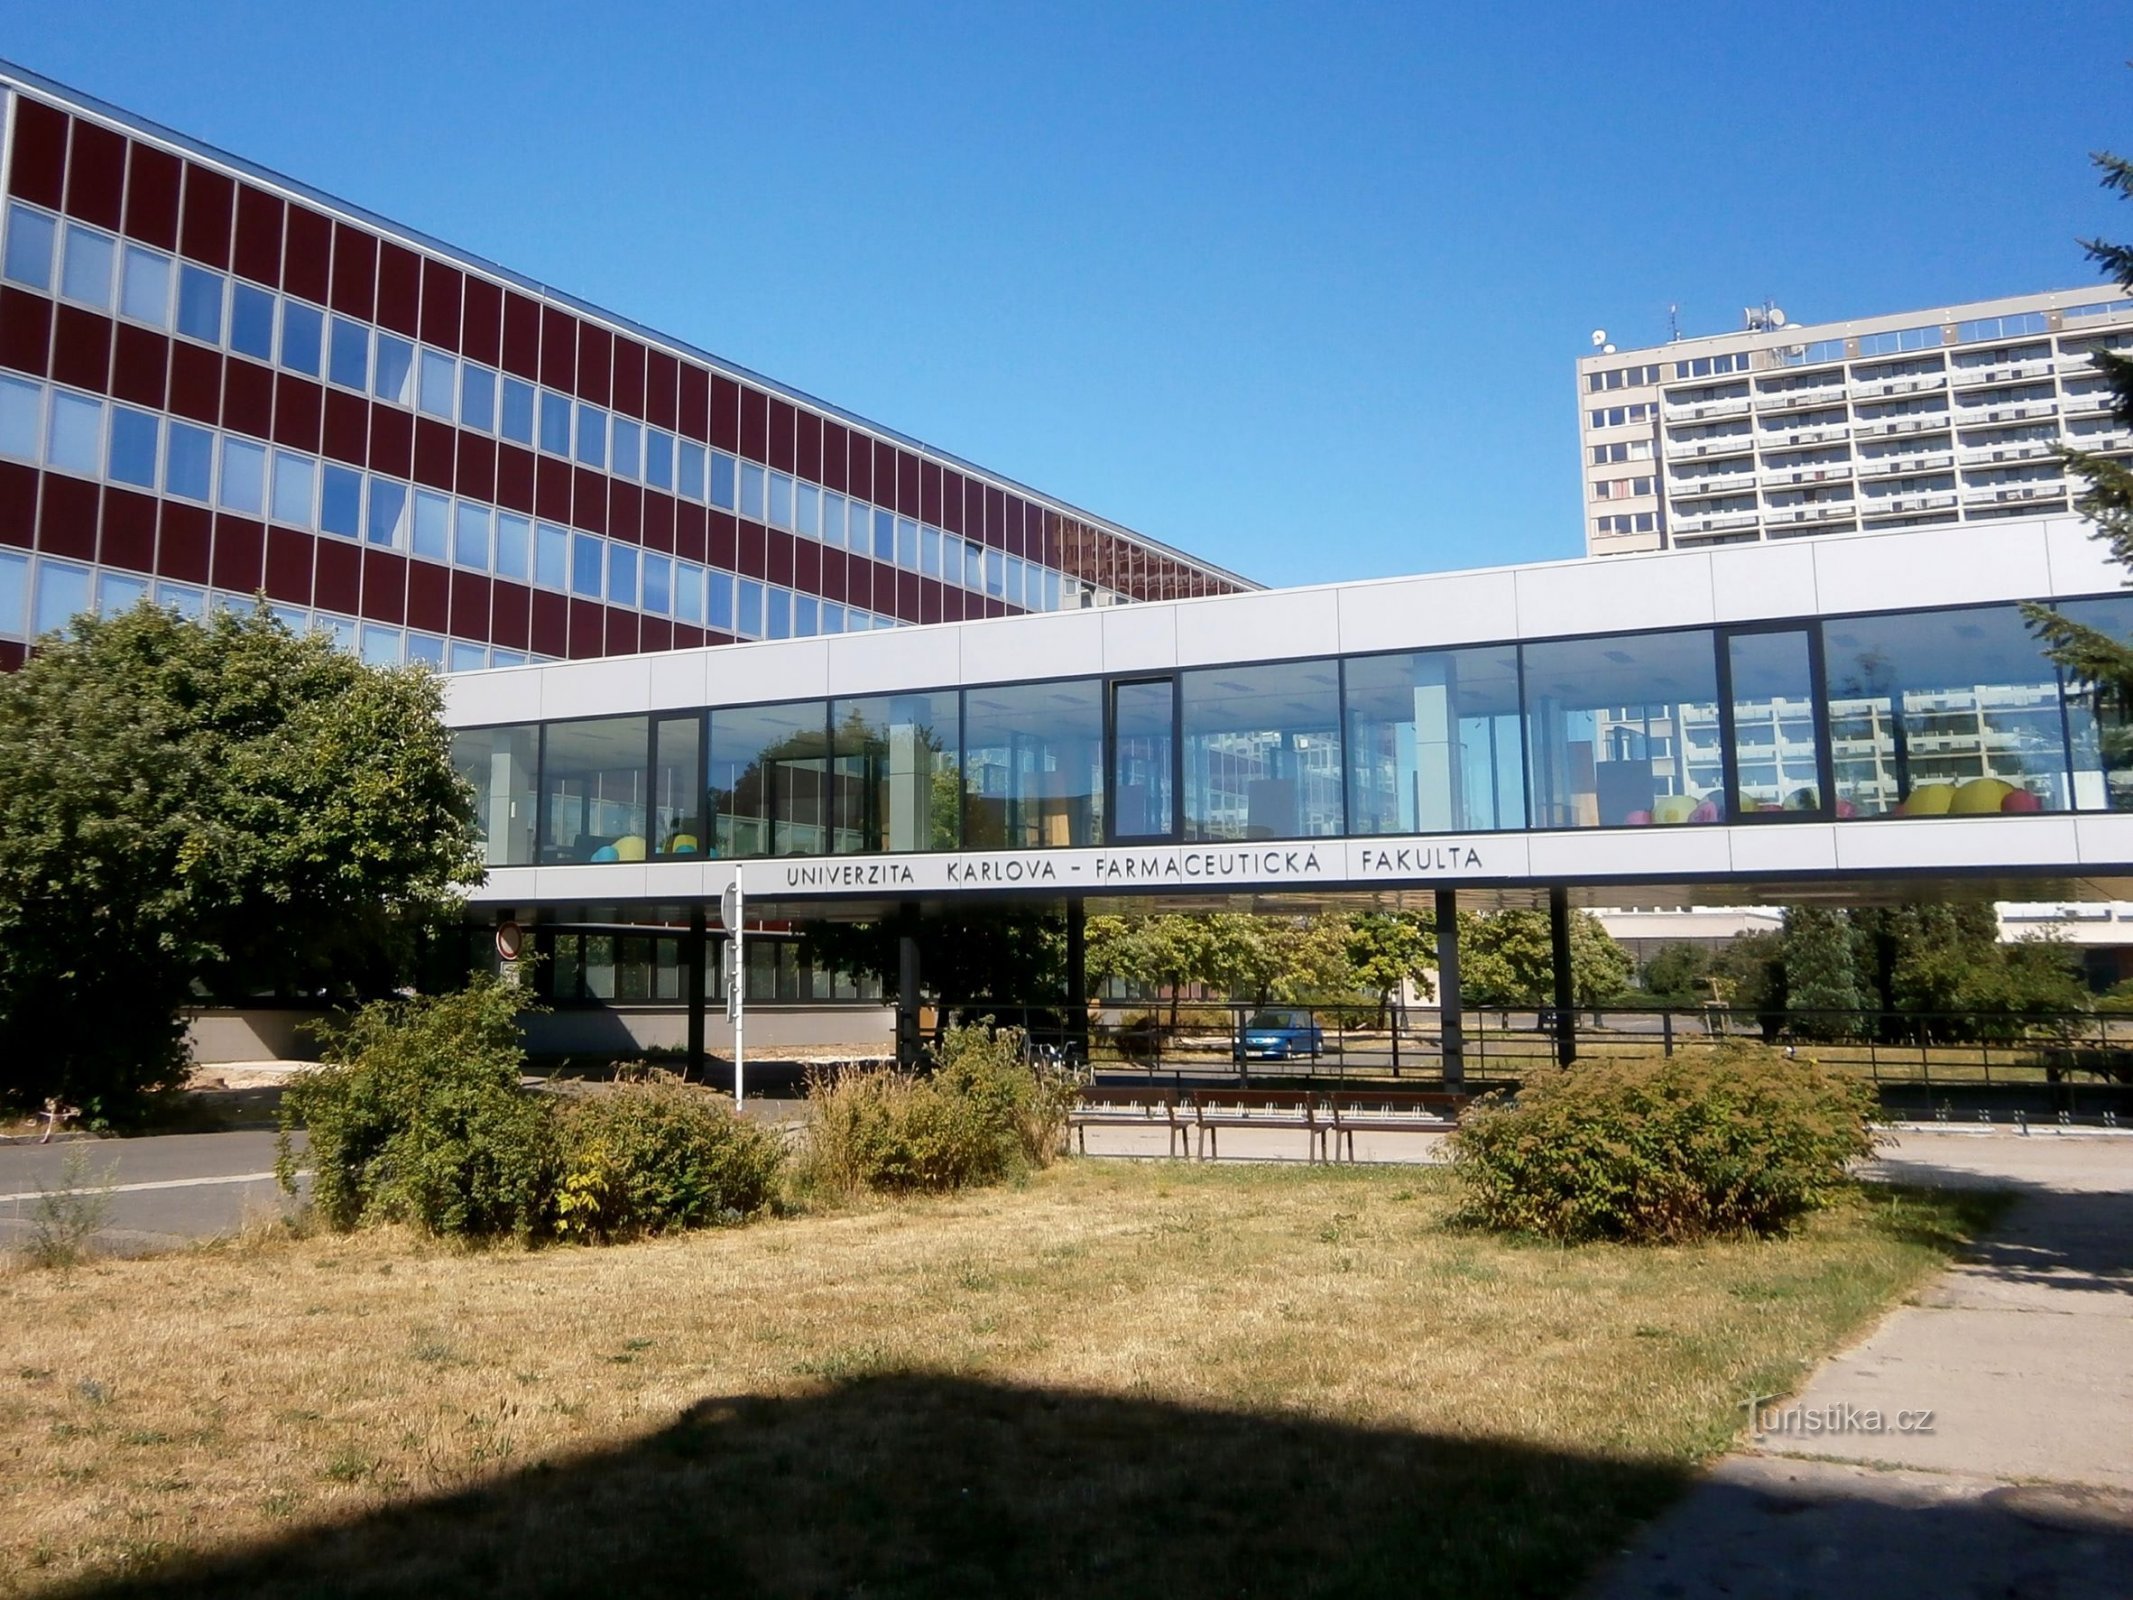 Fakultät für Pharmazie, Karlsuniversität (Hradec Králové, 26.7.2015. Juni XNUMX)